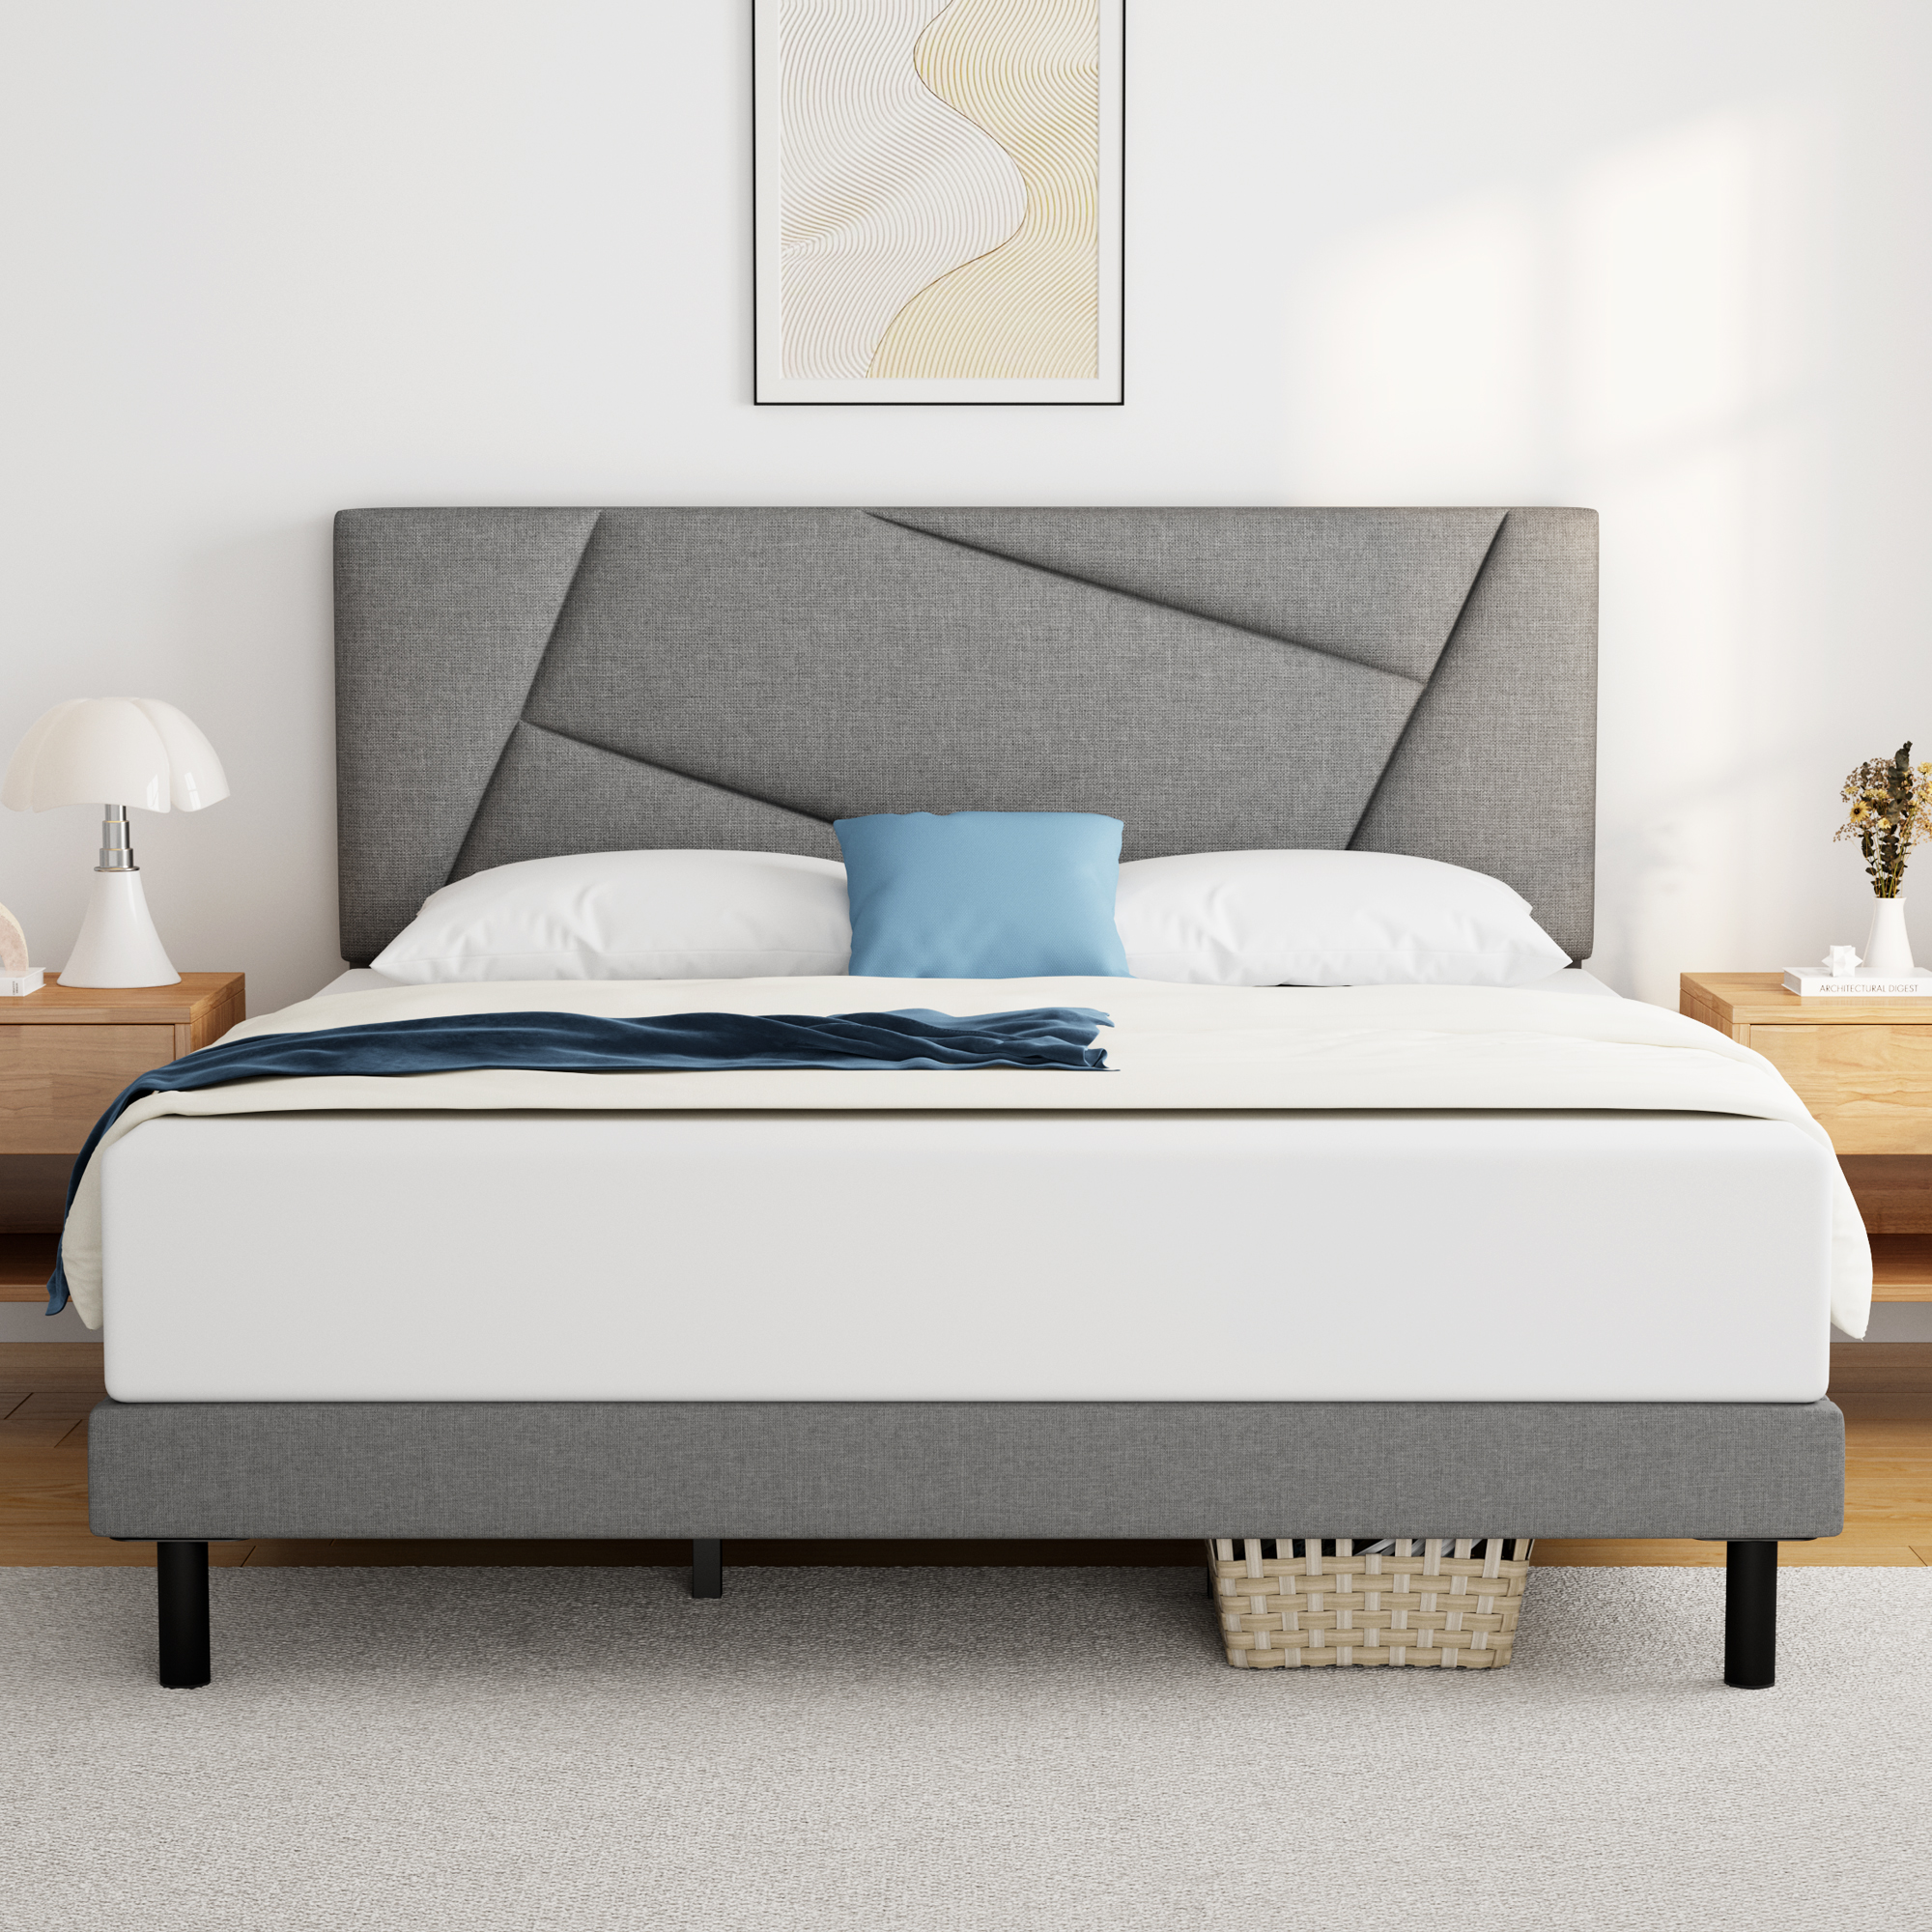 Full Bed Frame, HAIIDE Full Size Platform Bed Frame with Fabric Upholstered Headboard, Light Grey - image 1 of 7